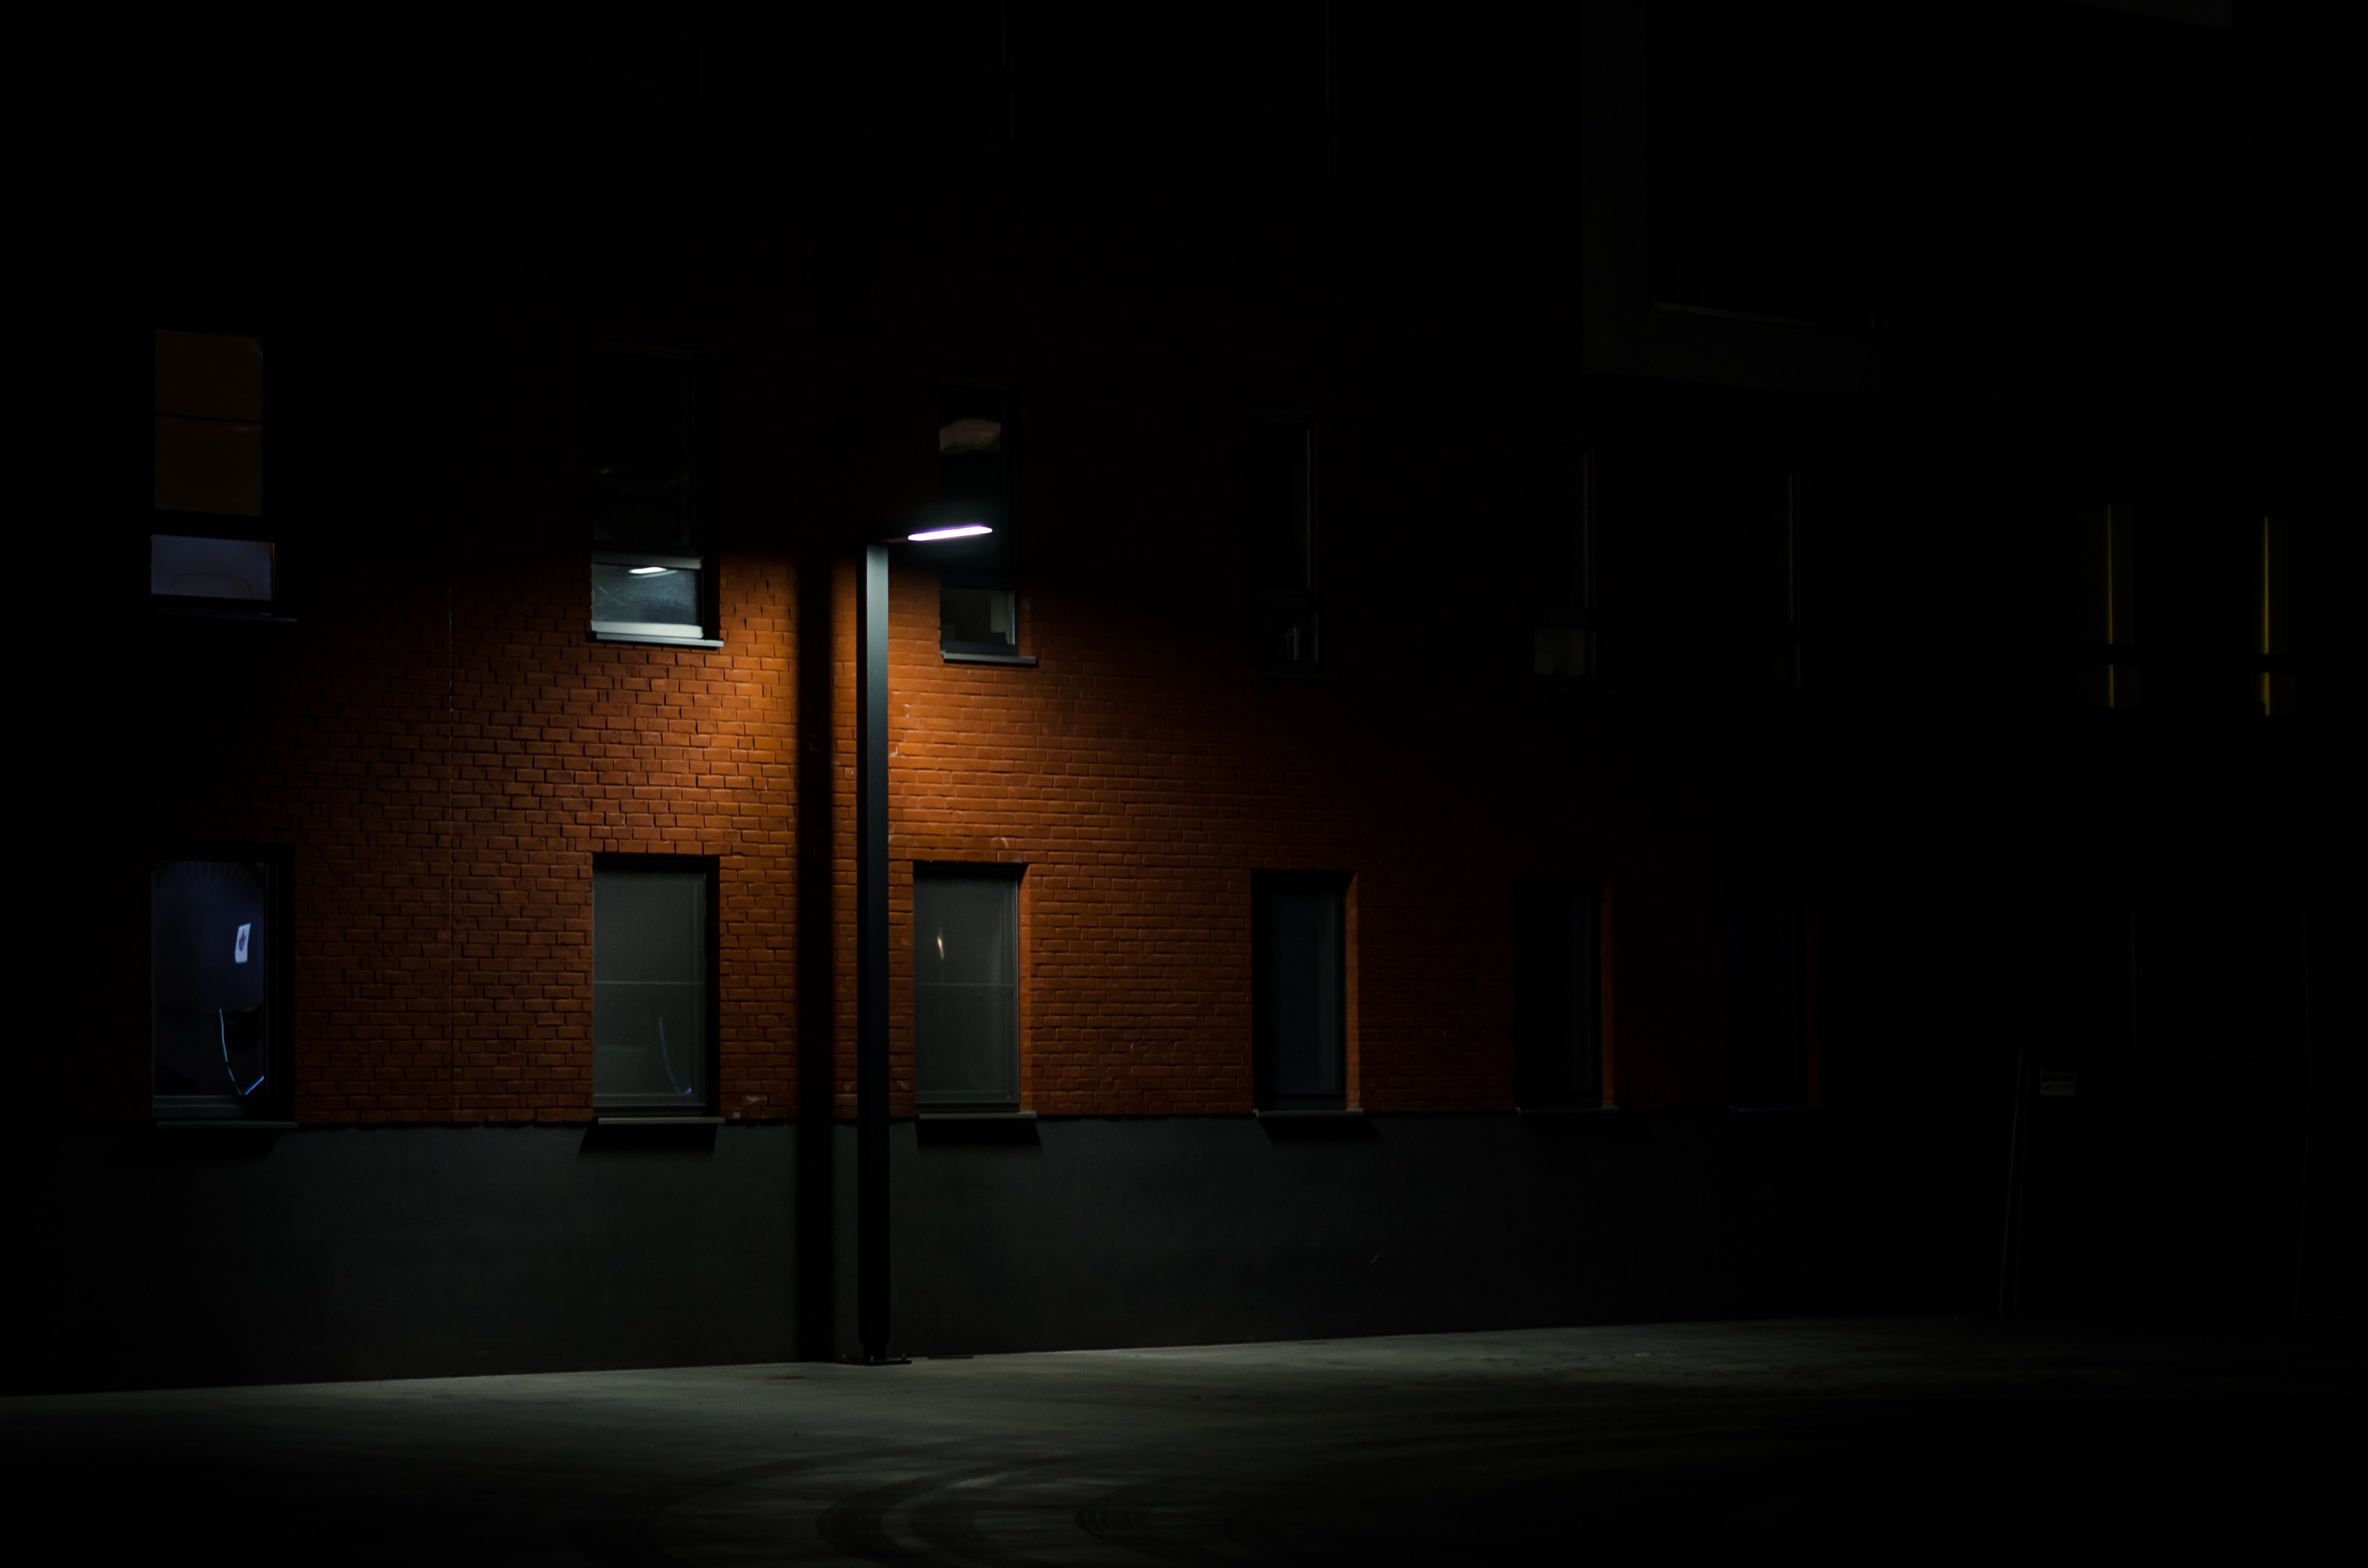 4179x2768 #light, #brickwall, #darkness, #street view, #street light, #brick, #minimal, #night, #wall, #spot light, #red brick, #lamppost, # streetlight, #urban, #dark, #lamp post, #PNG image, #facade, #brick wall. Mocah HD Wallpaper